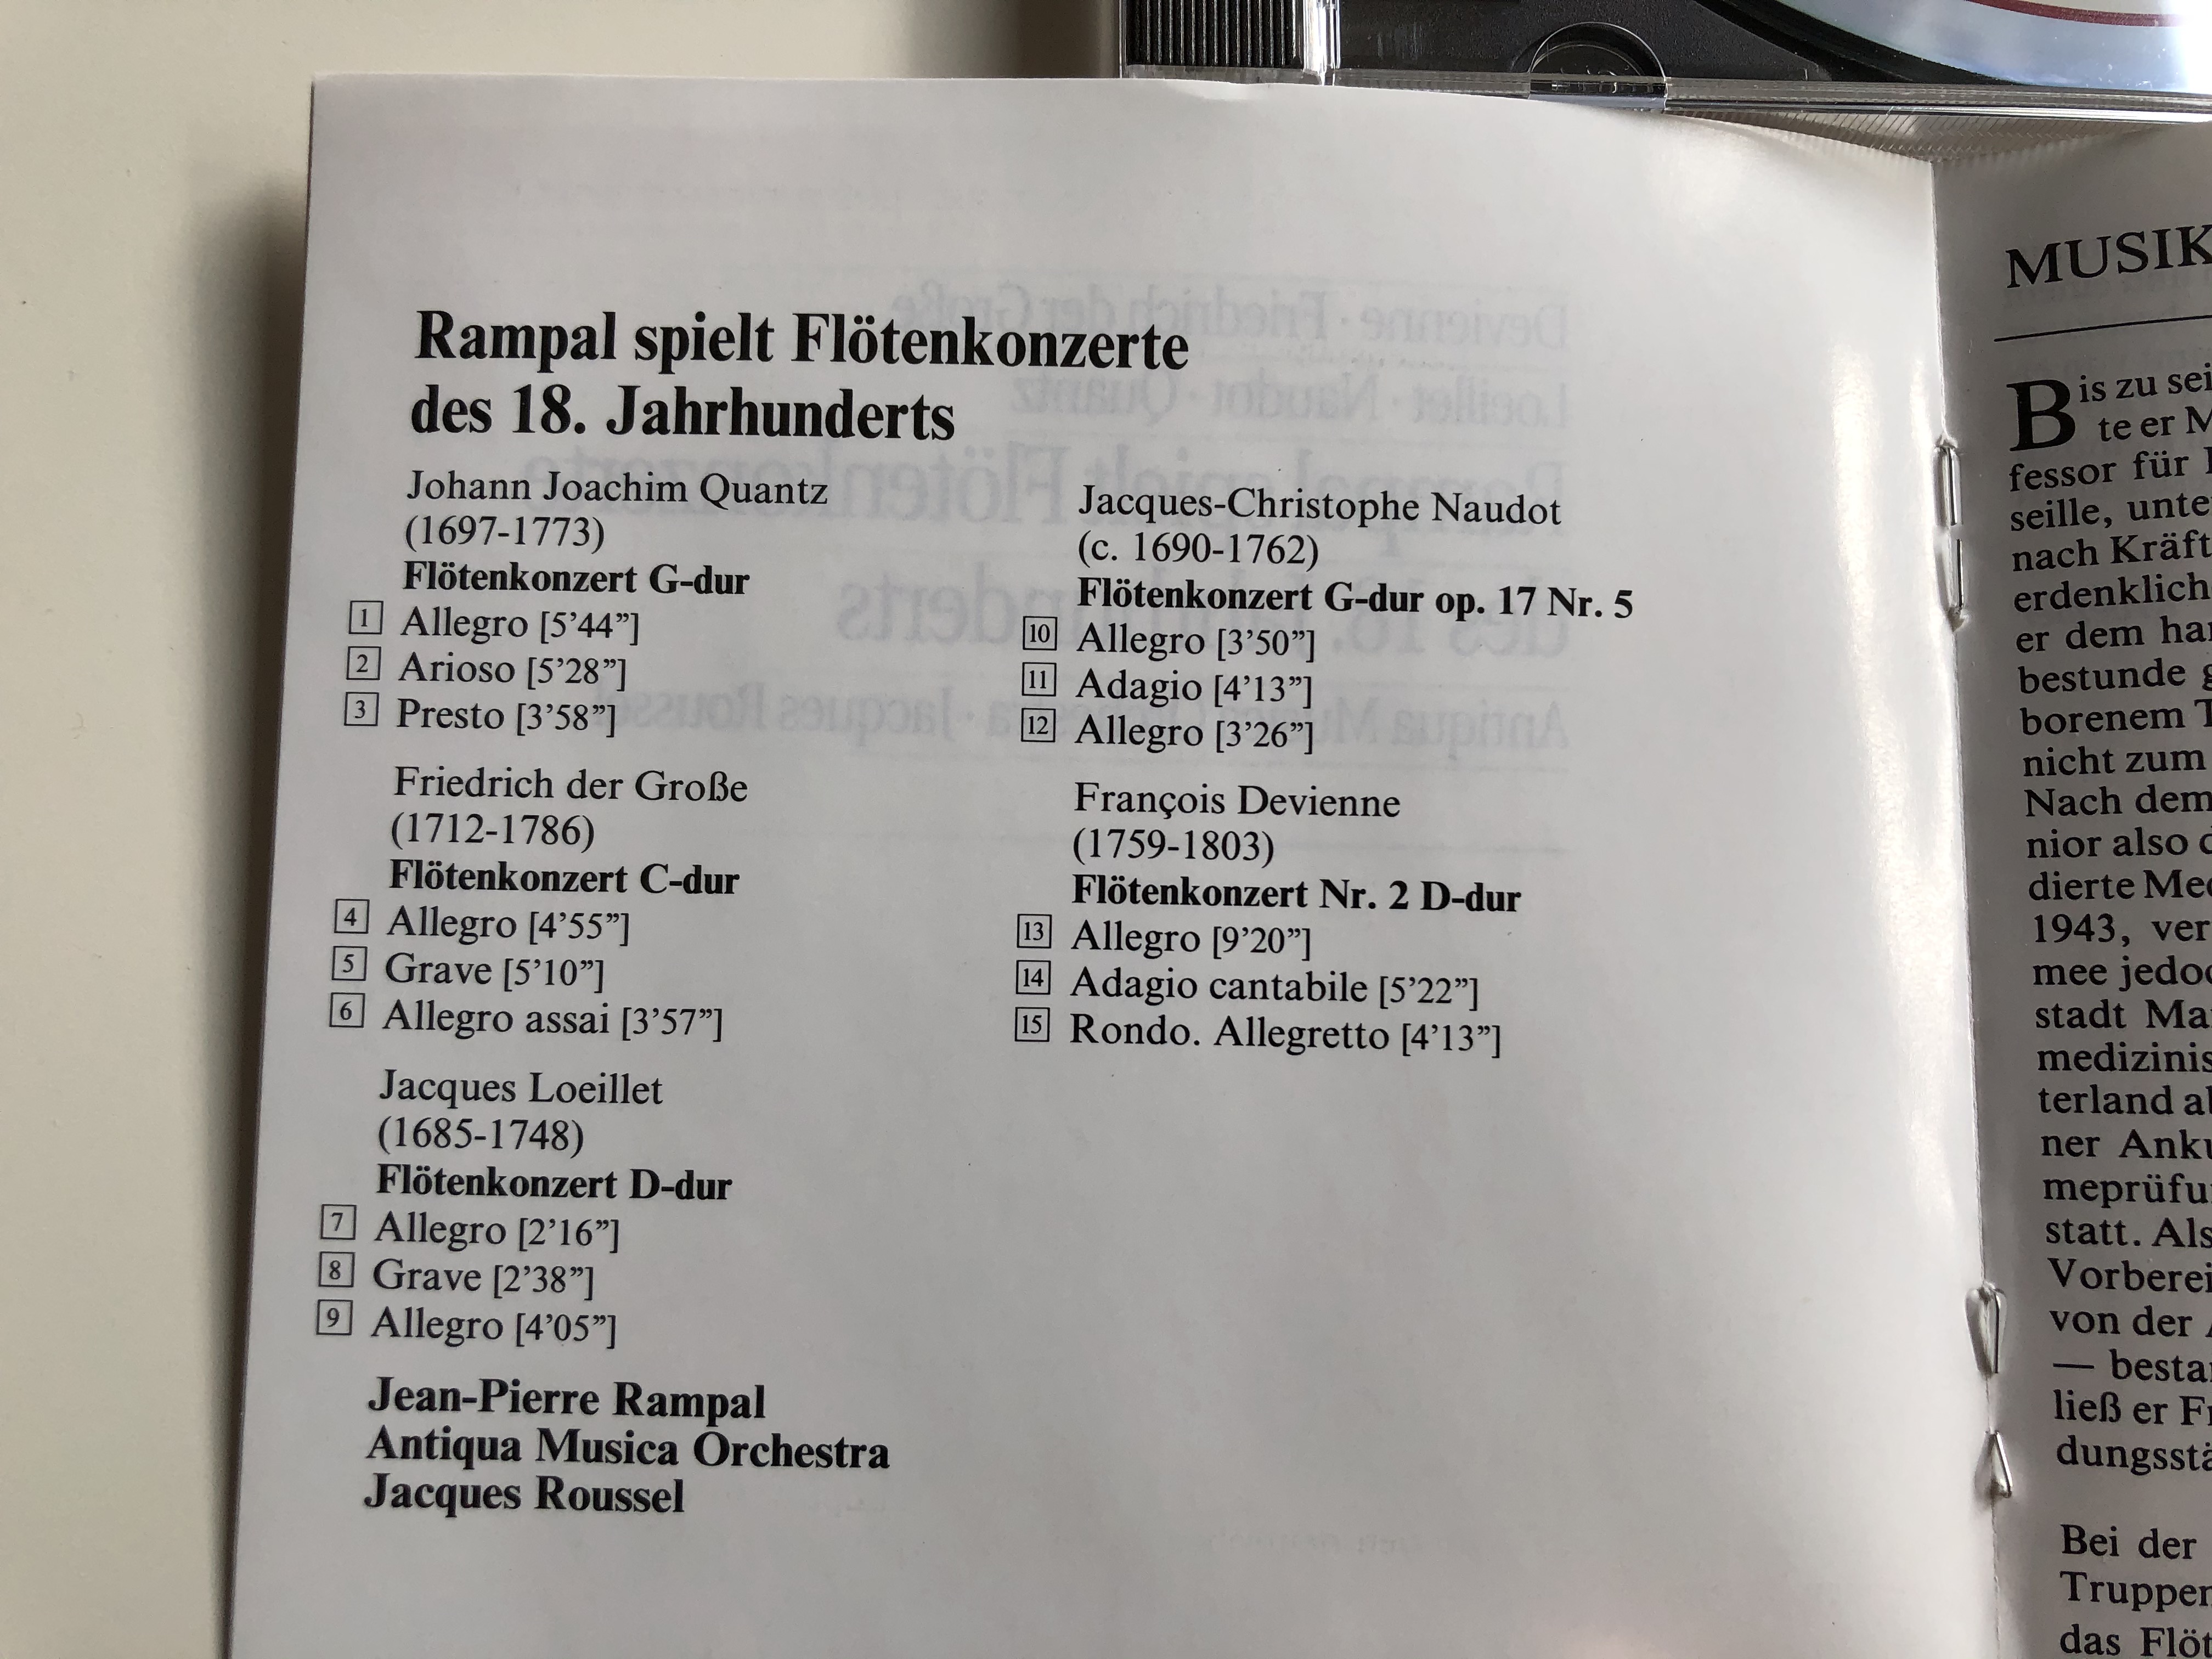 devienne-friedrich-der-grose-loeillet-naudot-quantz-rampal-spielt-flotenkonzerte-des-18.-jahrhunderts-antiqua-musica-orchestra-jacques-roussel-solo-65-min-philips-audio-cd-1994-442-6-3-.jpg